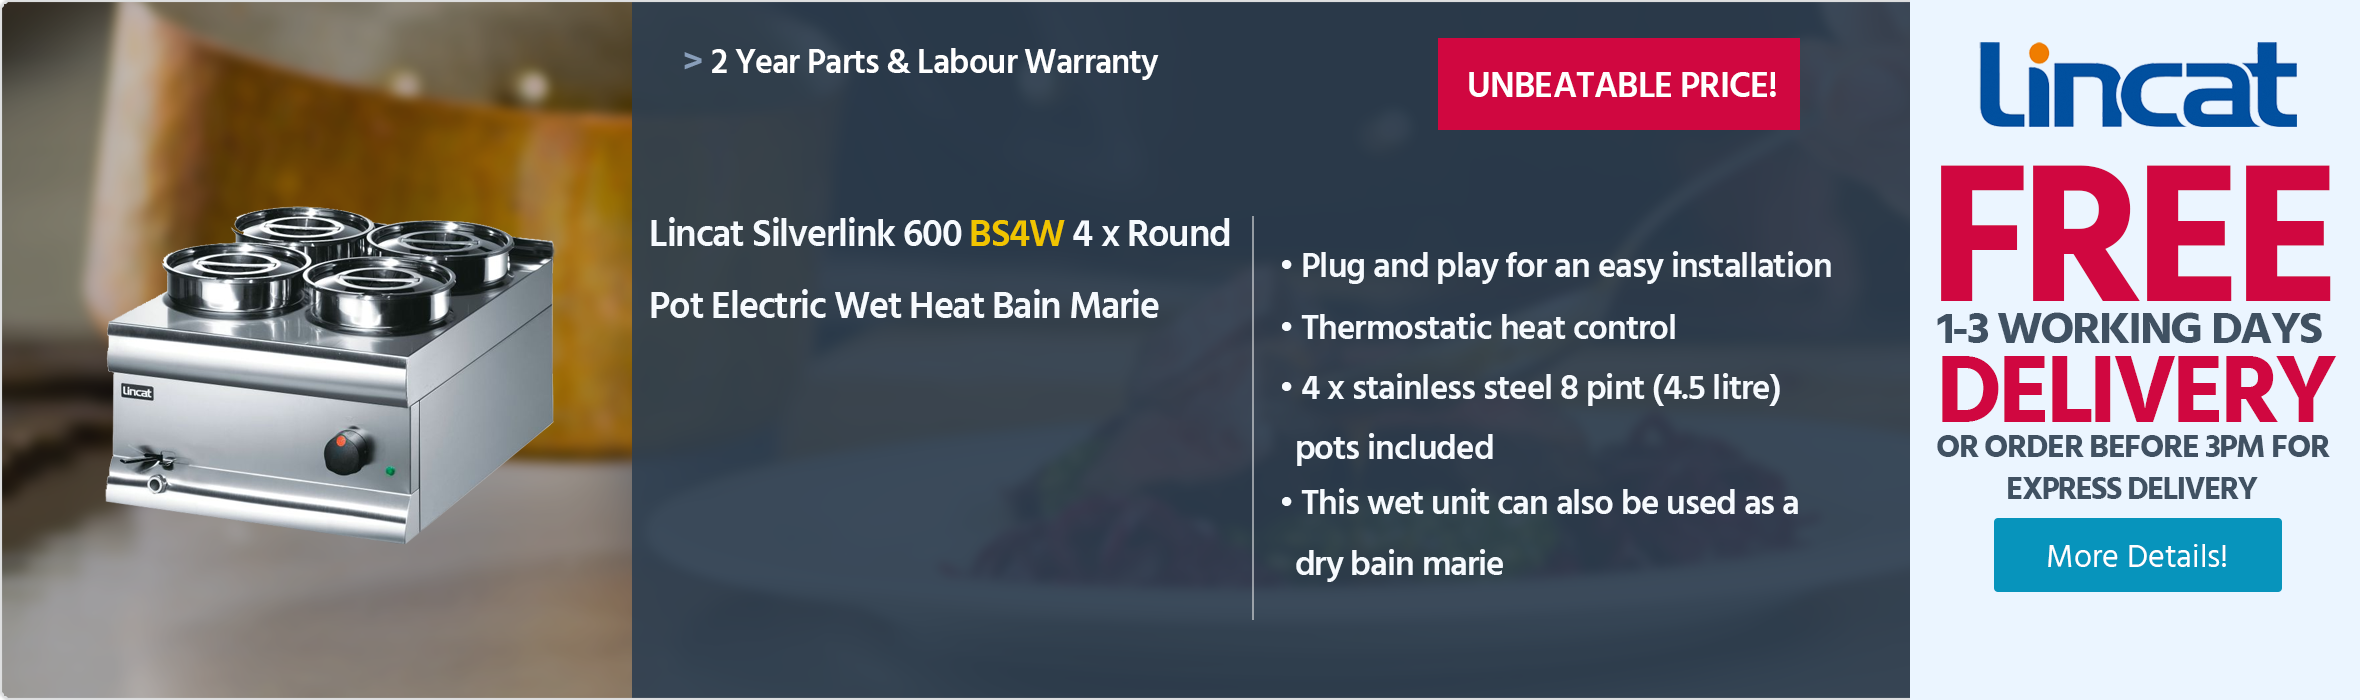 Lincat Silverlink 600 BS4W 4 x Round Pot Electric Countertop Wet Heat Bain Marie